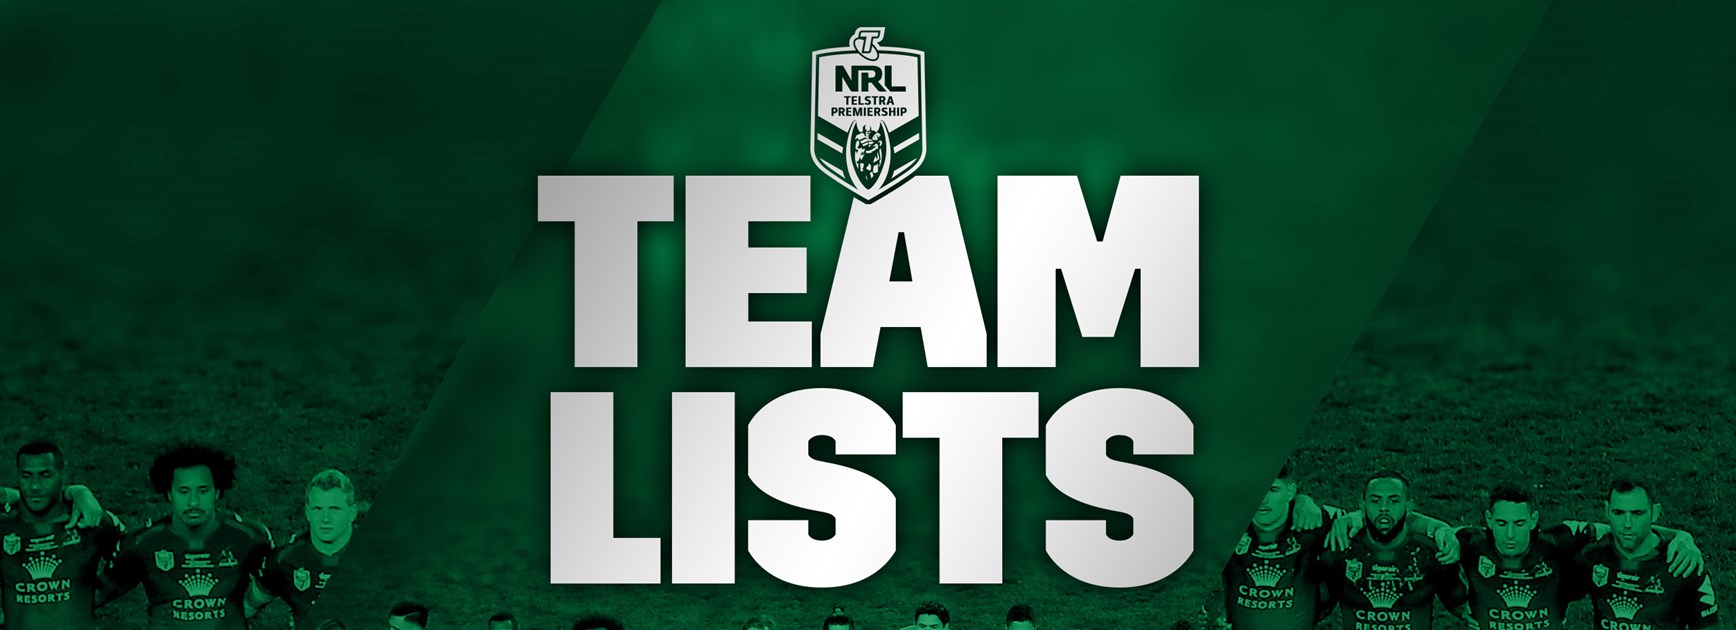 Round 6 NRL team lists